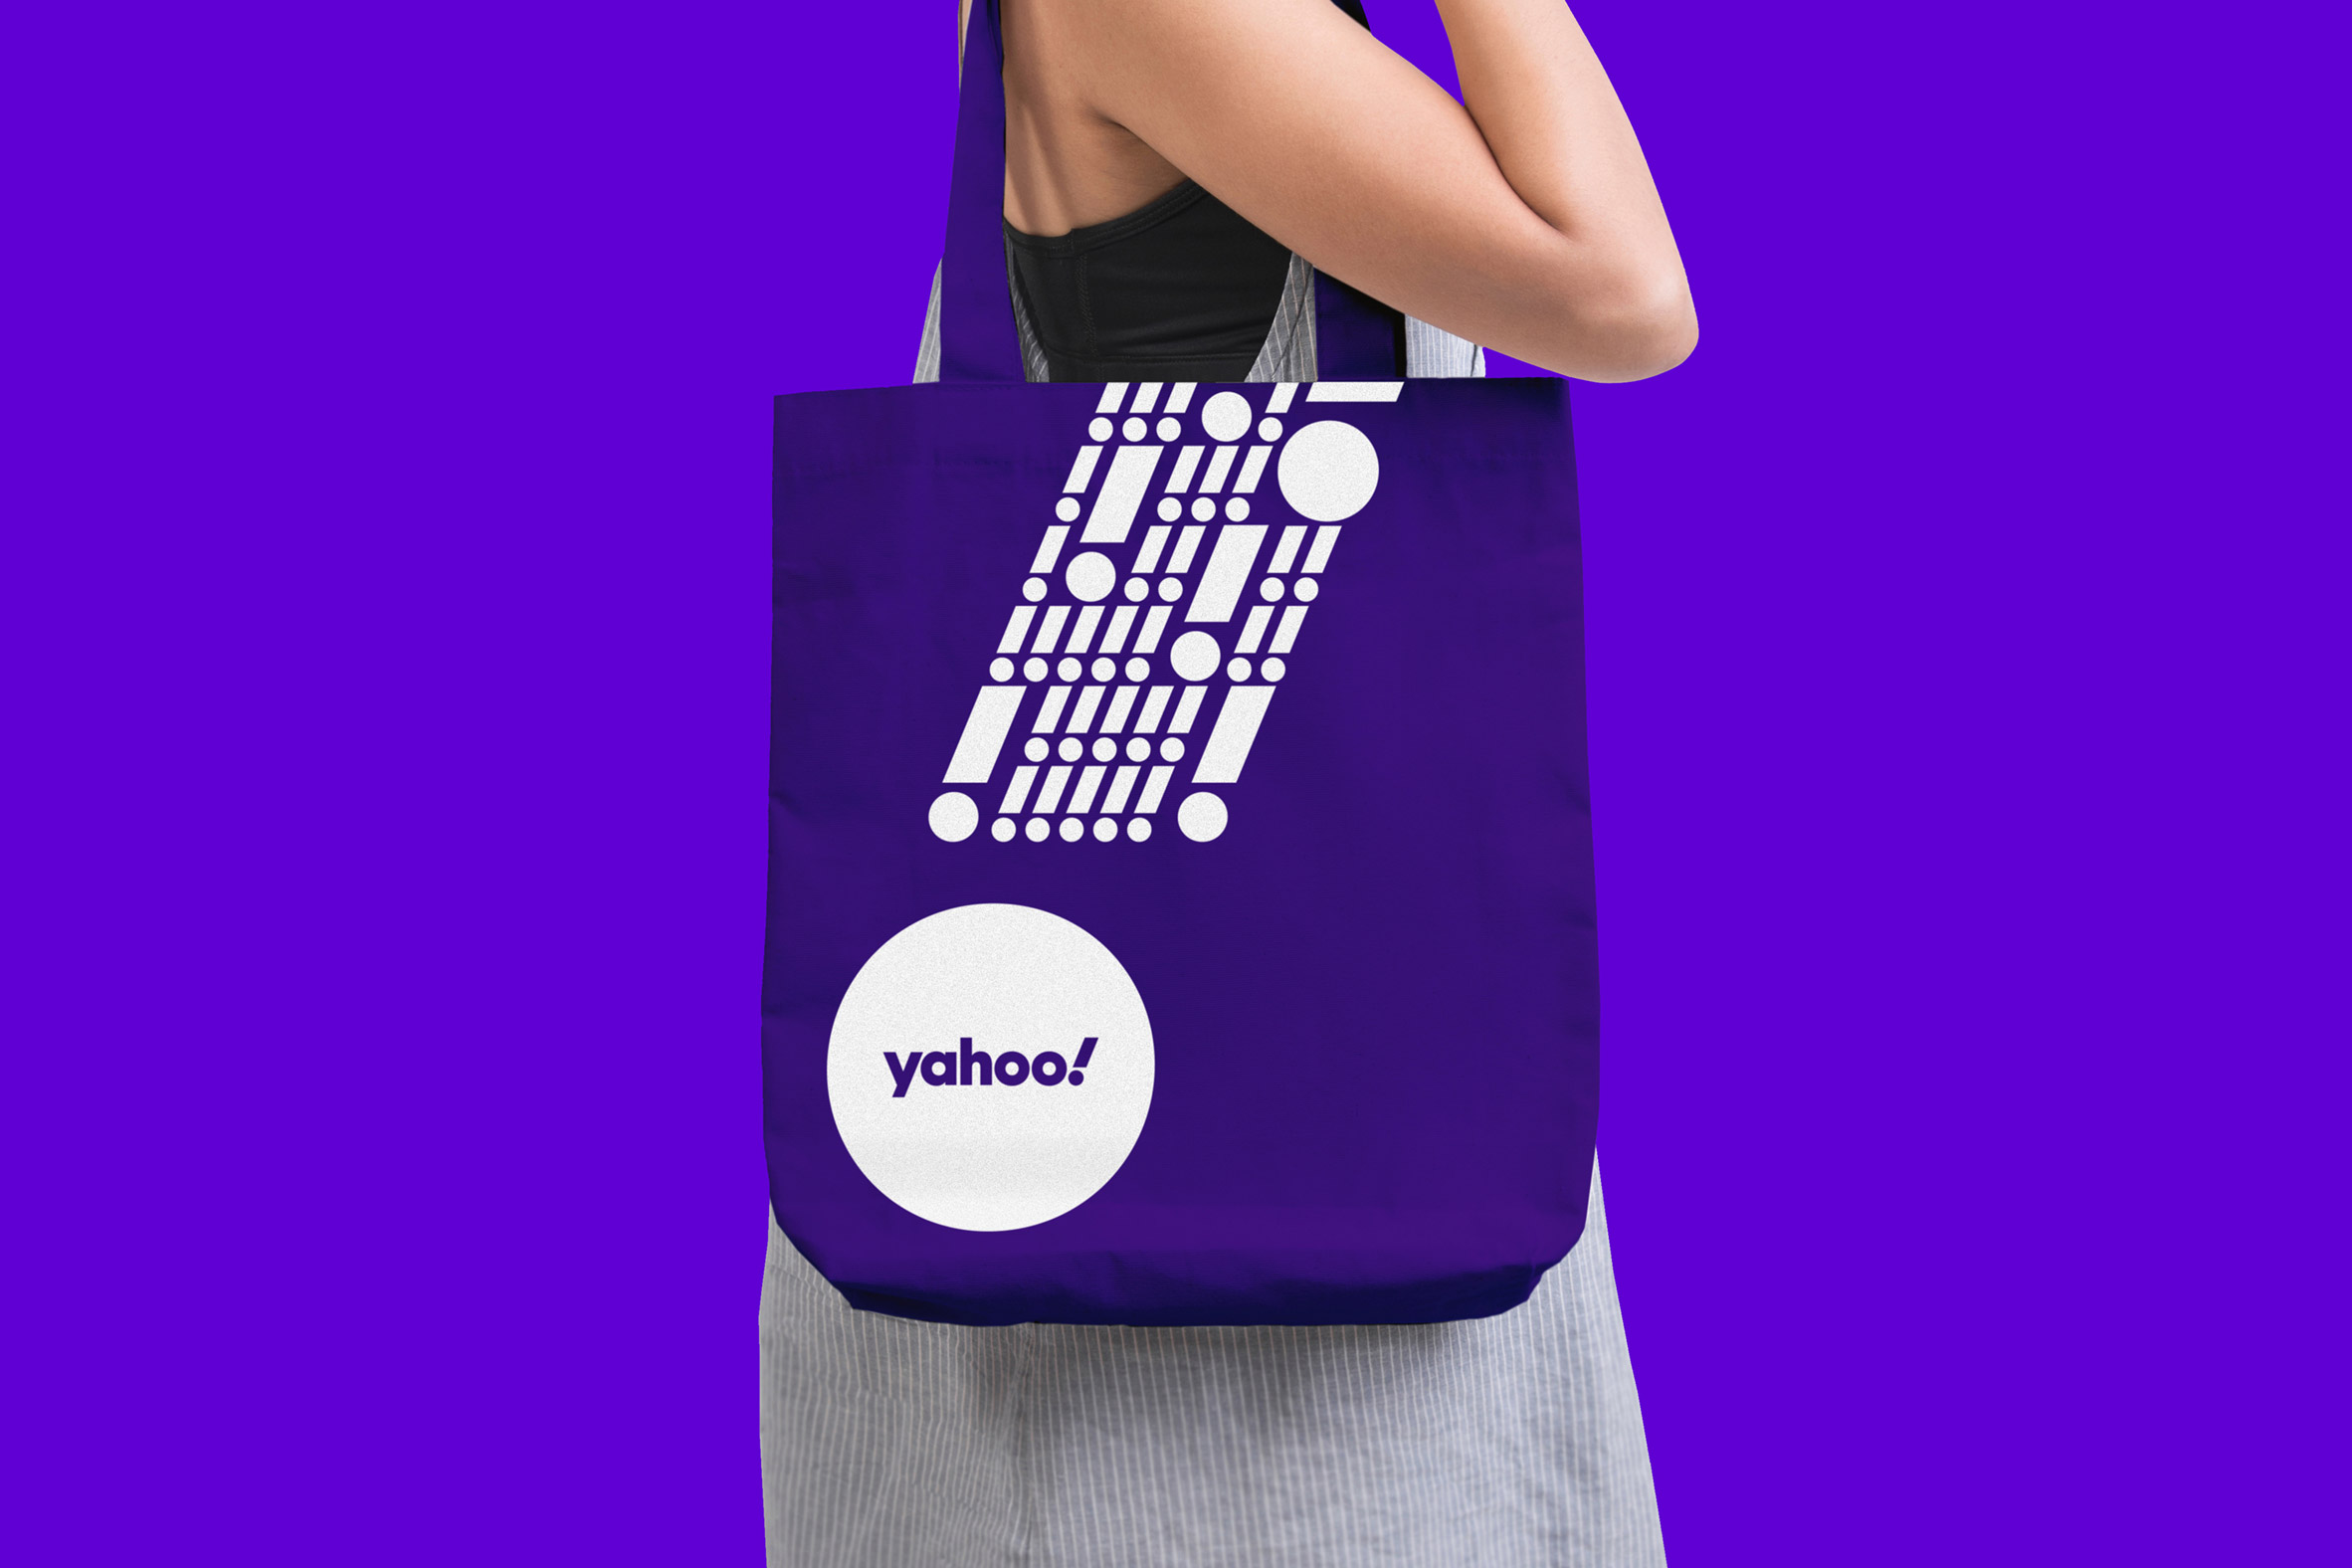 Pentagram creates 21st-century identity with Yahoo logo rebrand